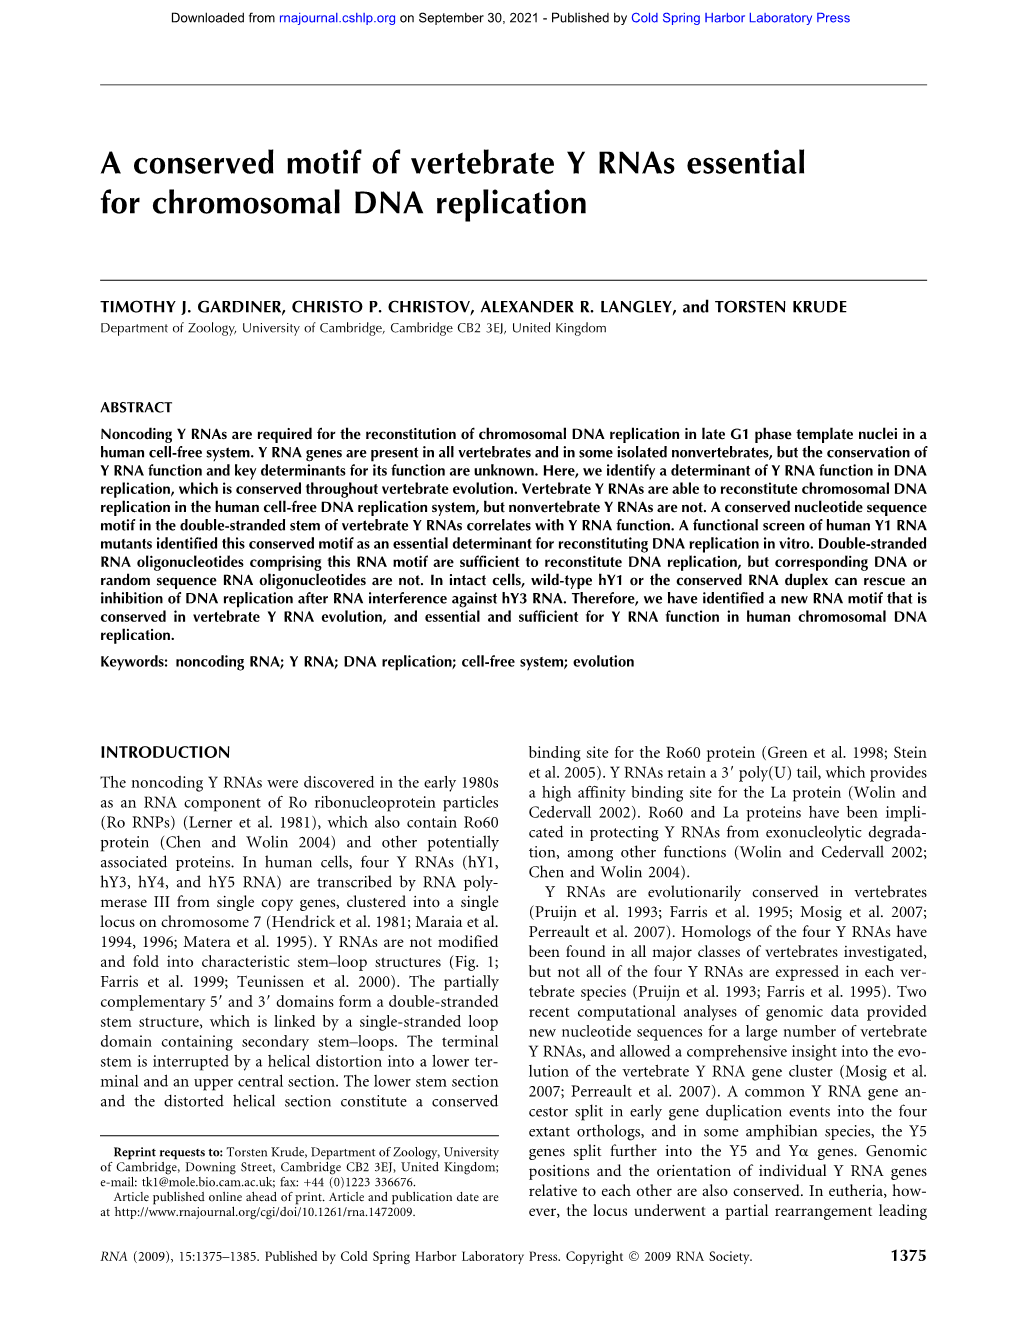 A Conserved Motif of Vertebrate Y Rnas Essential for Chromosomal DNA Replication